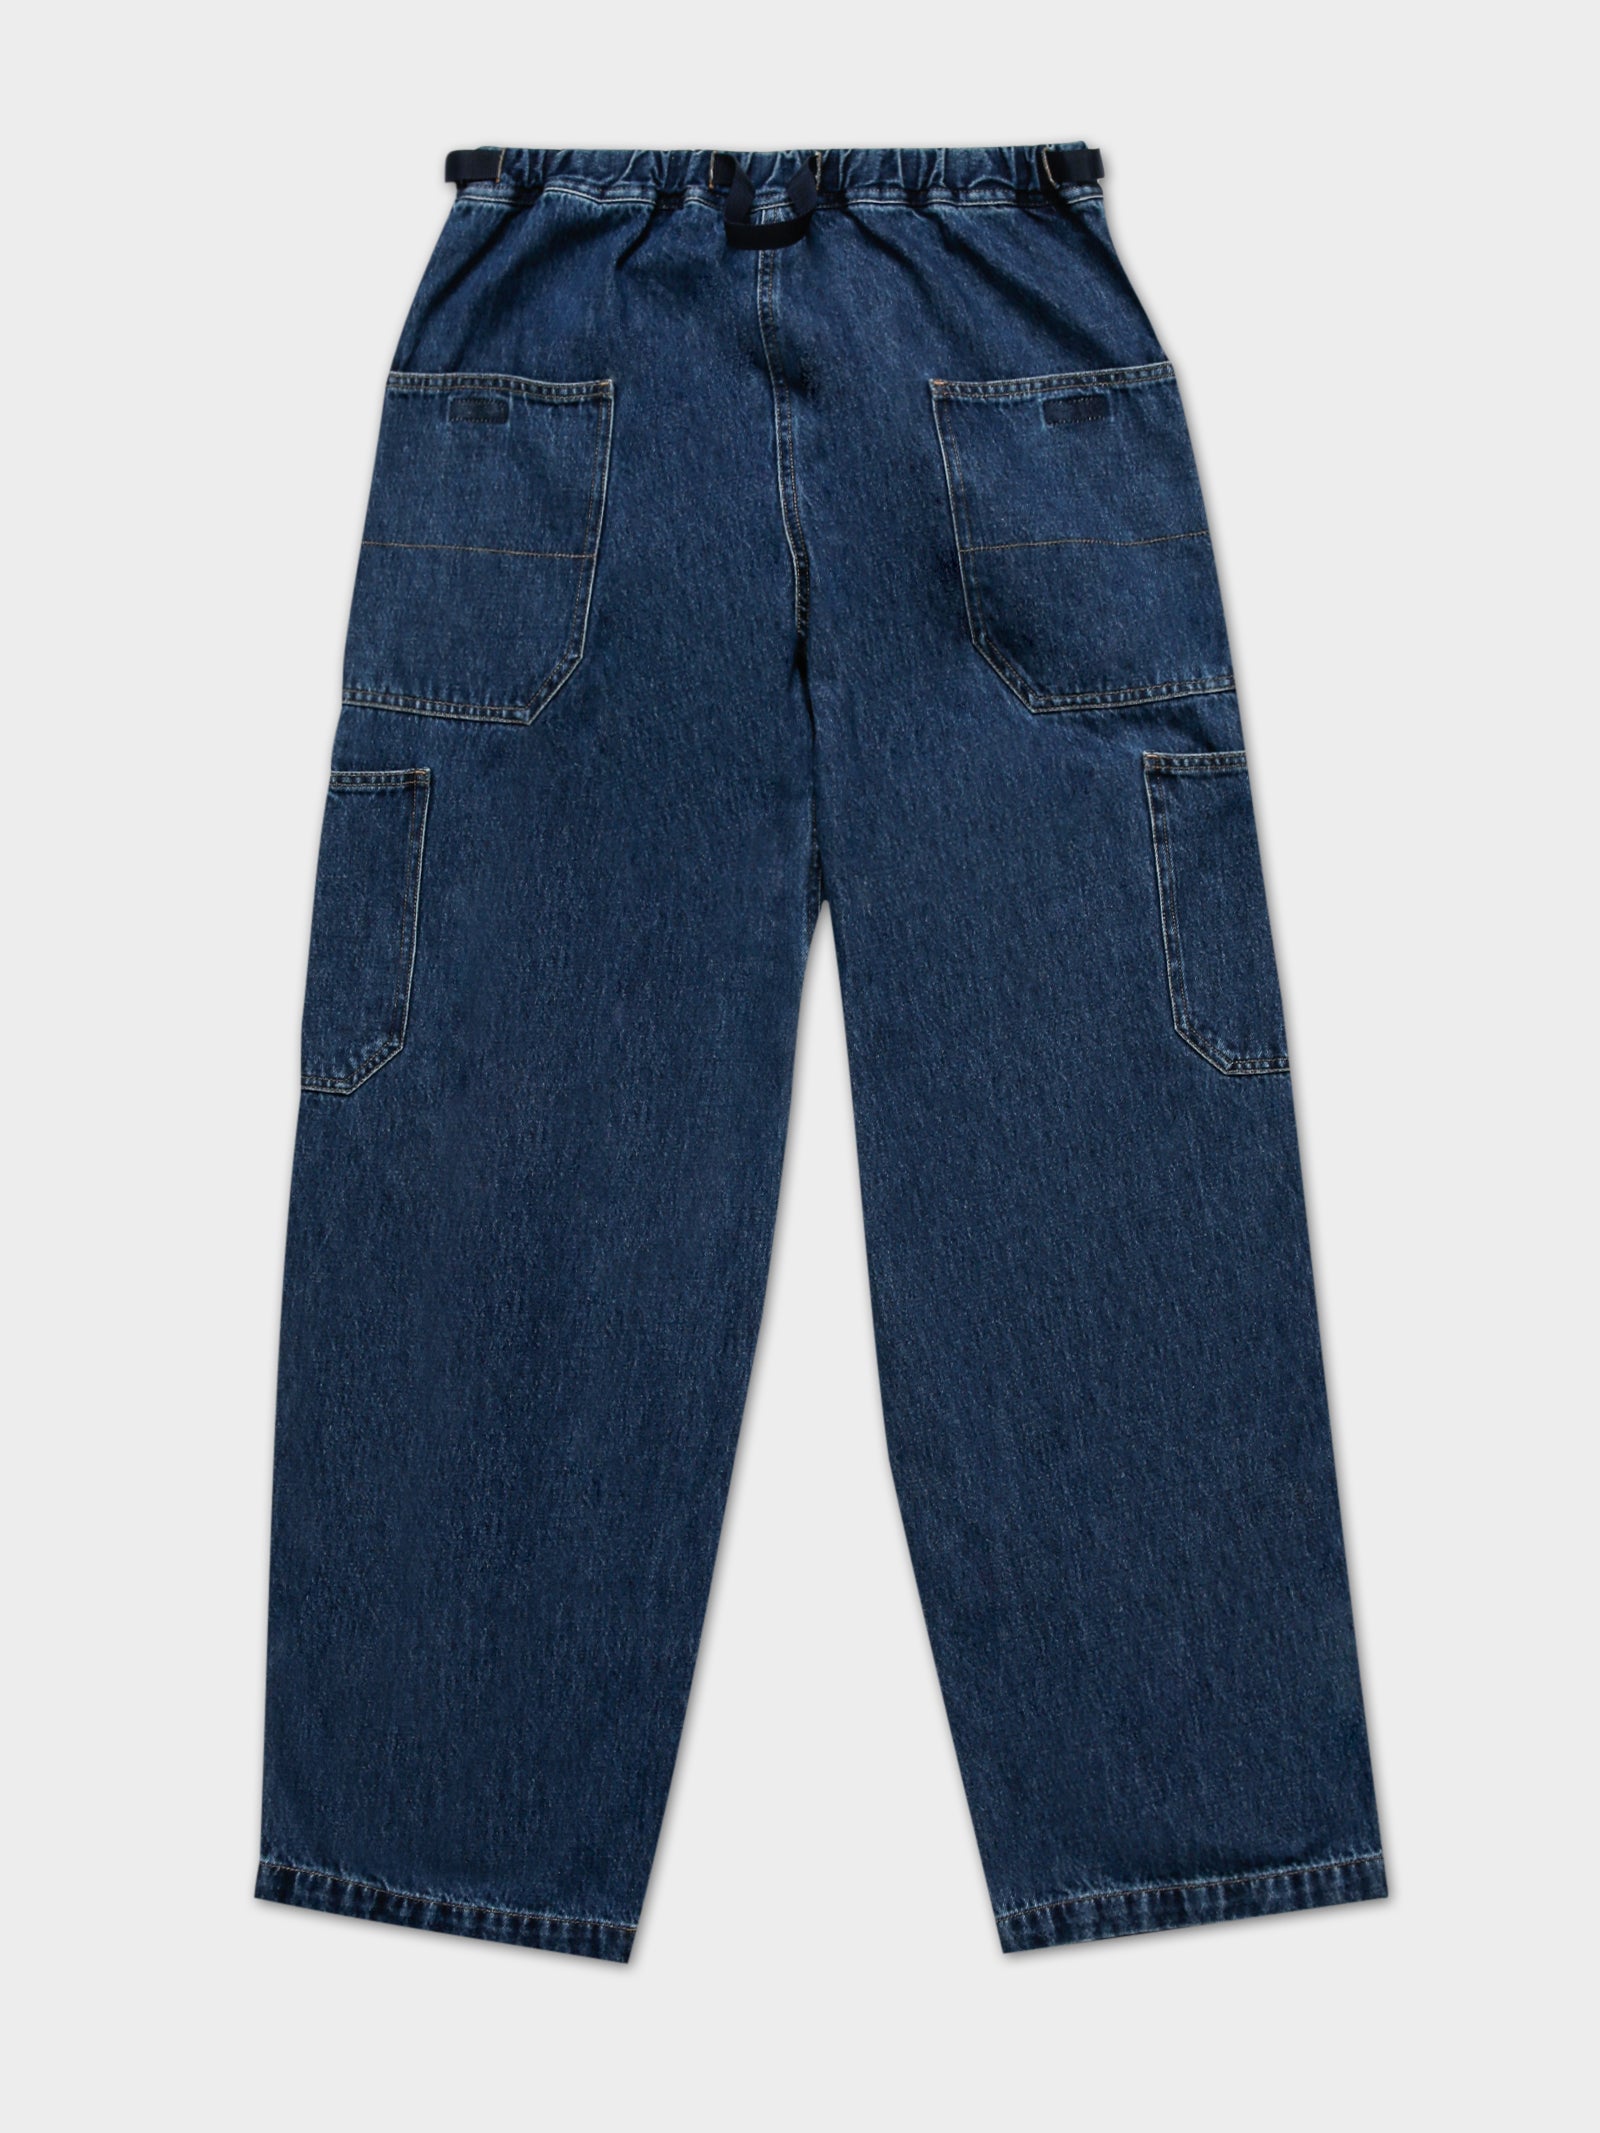 Rock Slide Jeans in Mid Indigo Blue